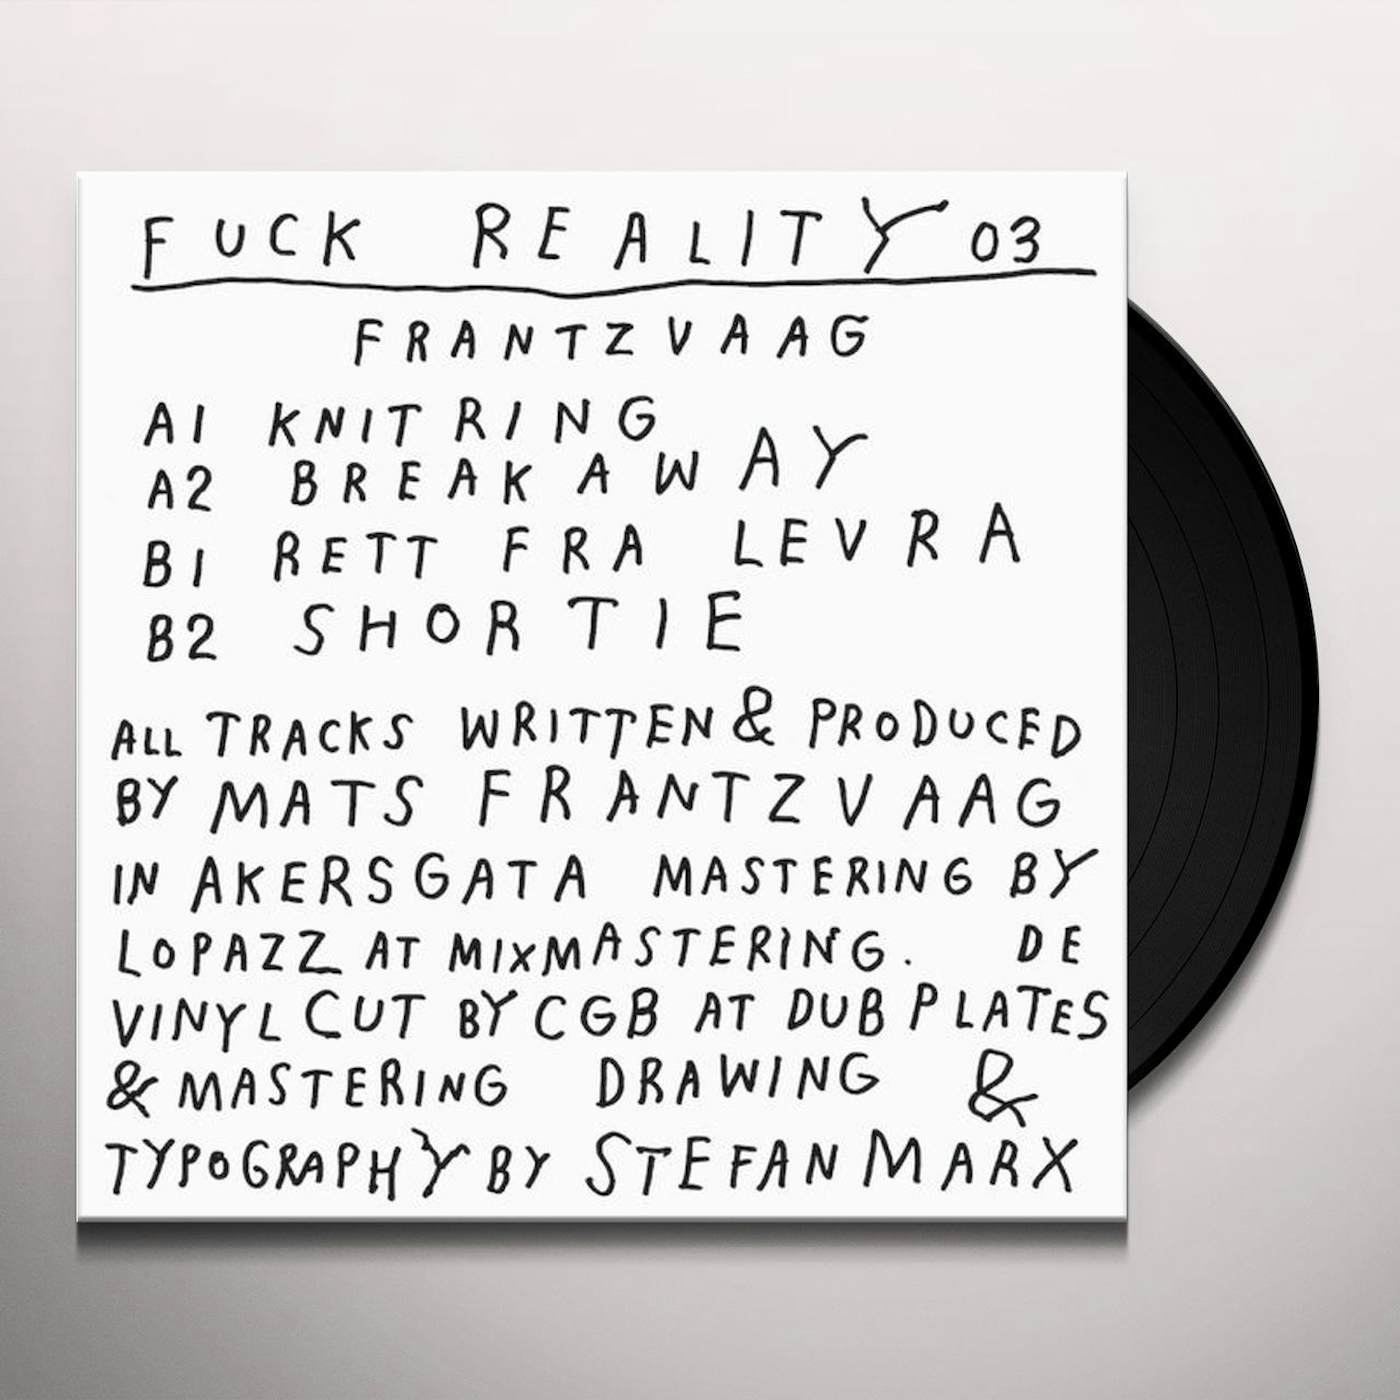 Frantzvaag FUCK REALITY 03 Vinyl Record